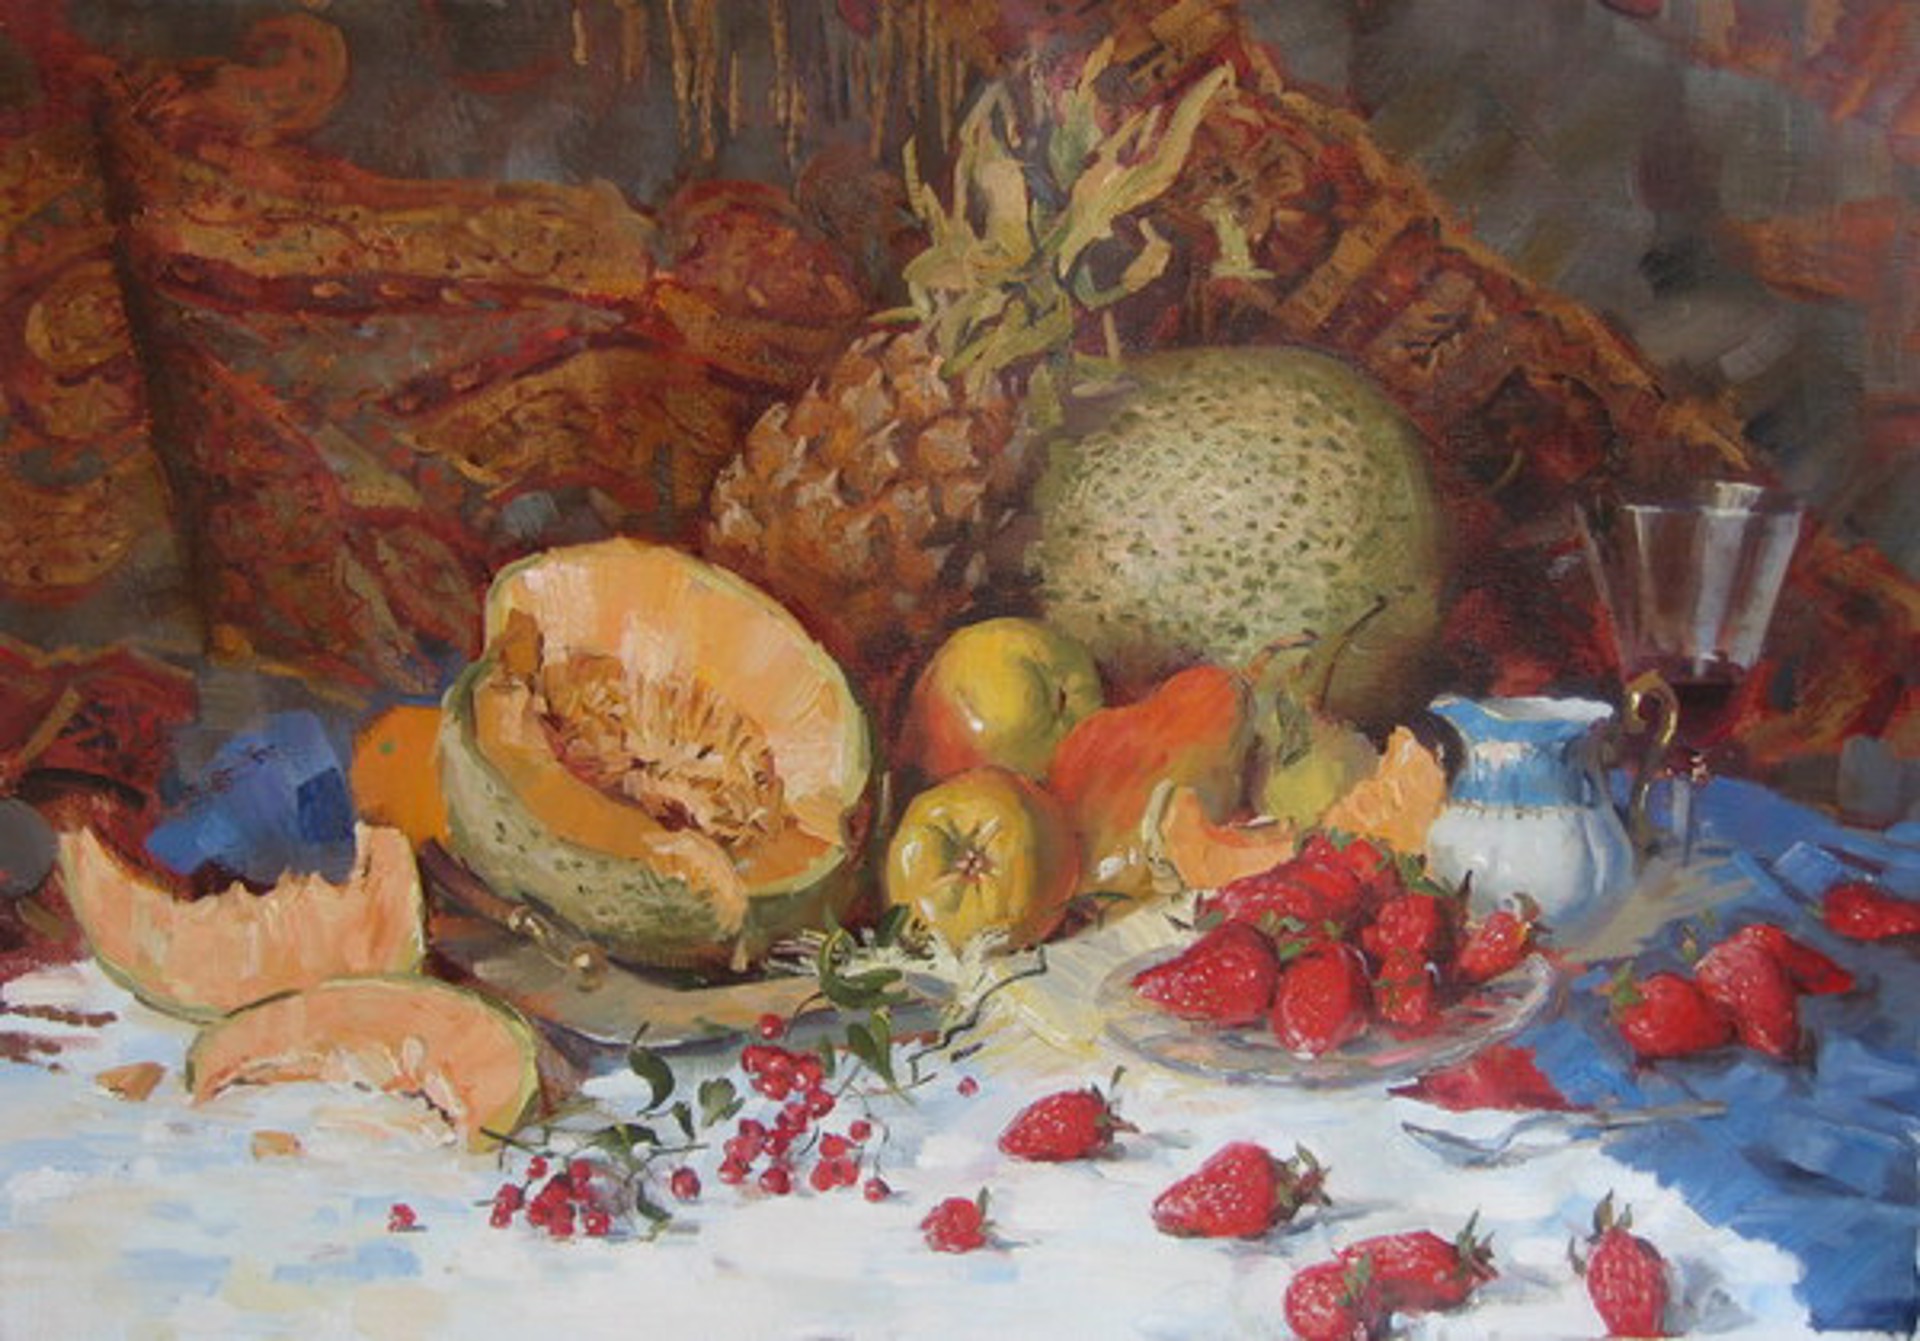 Melons and Strawberries by Tatyana Lushnikova